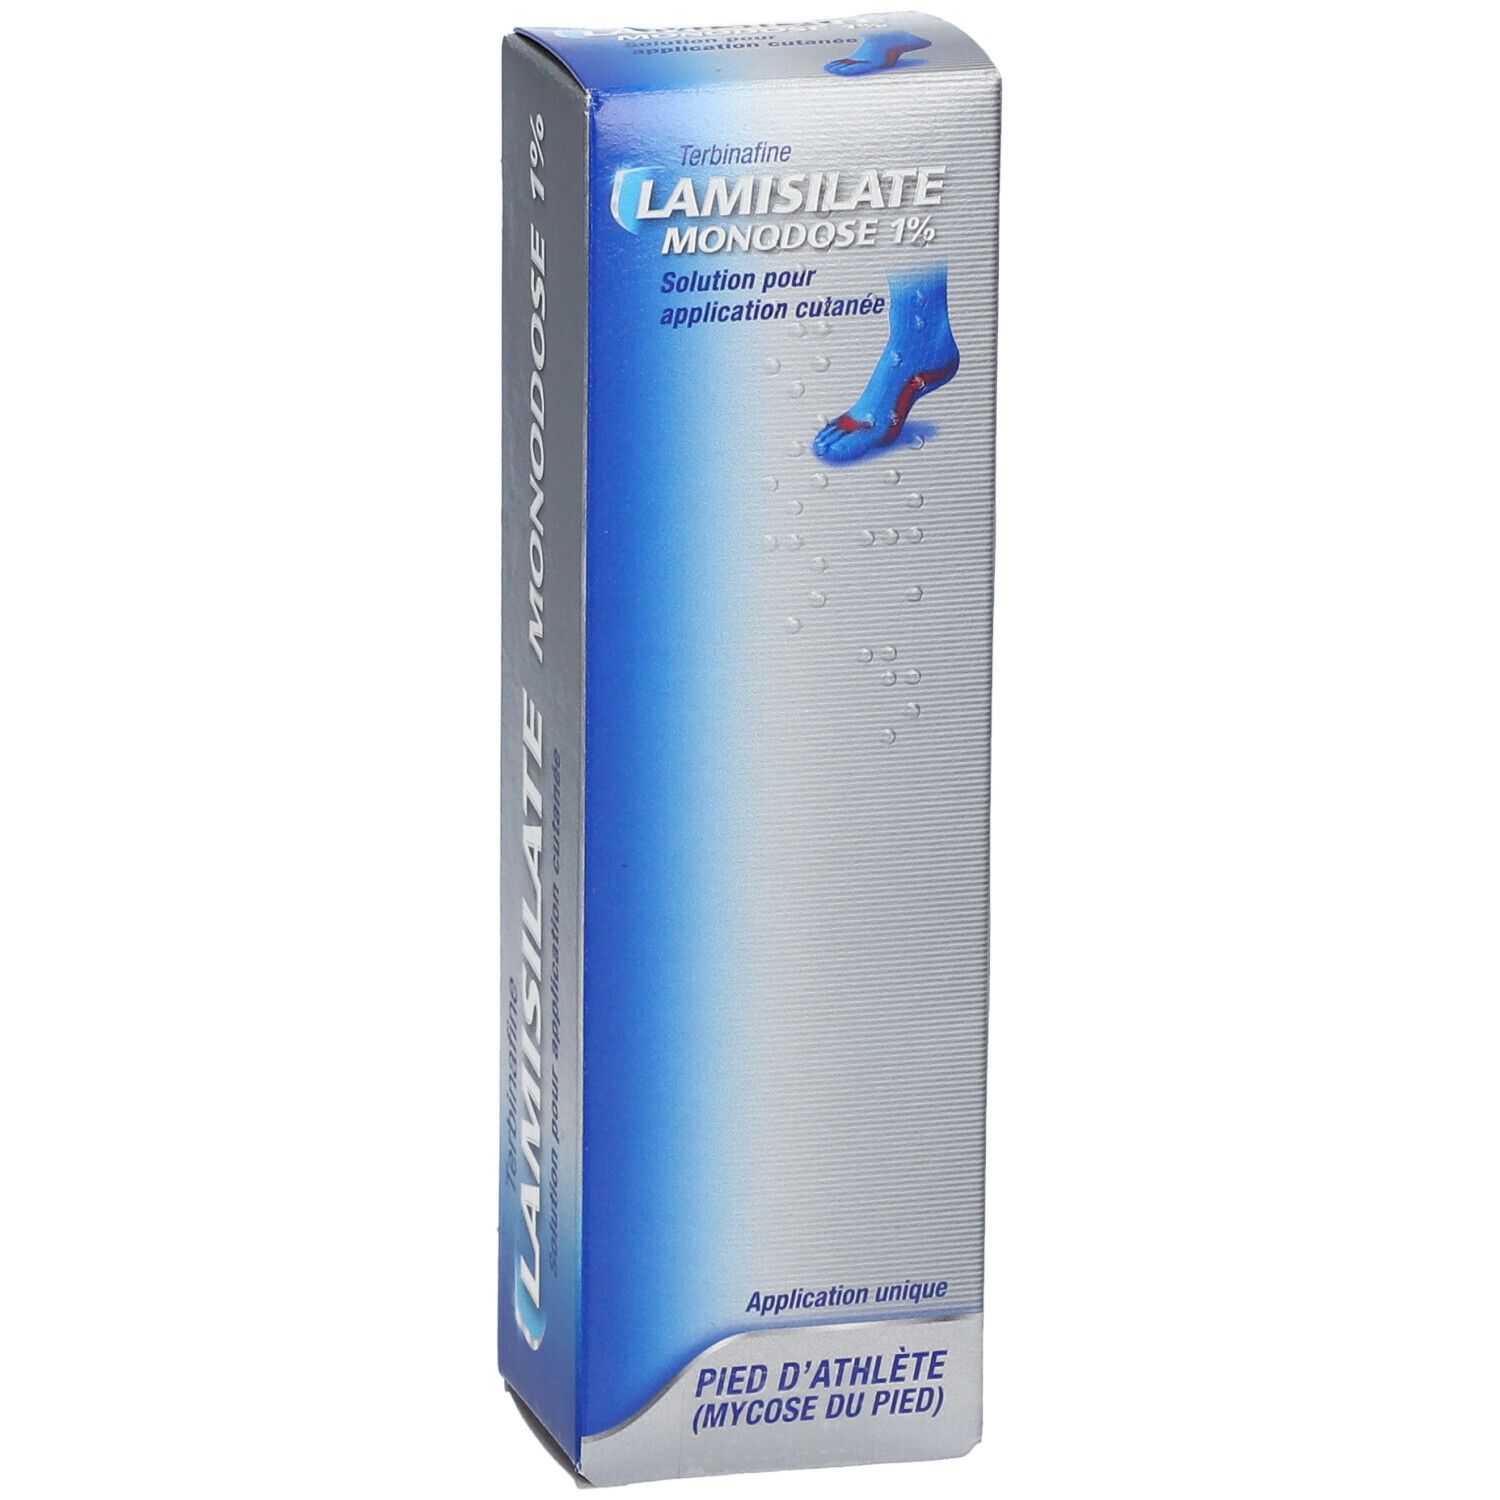 Lamisilate® Monodose 1 %